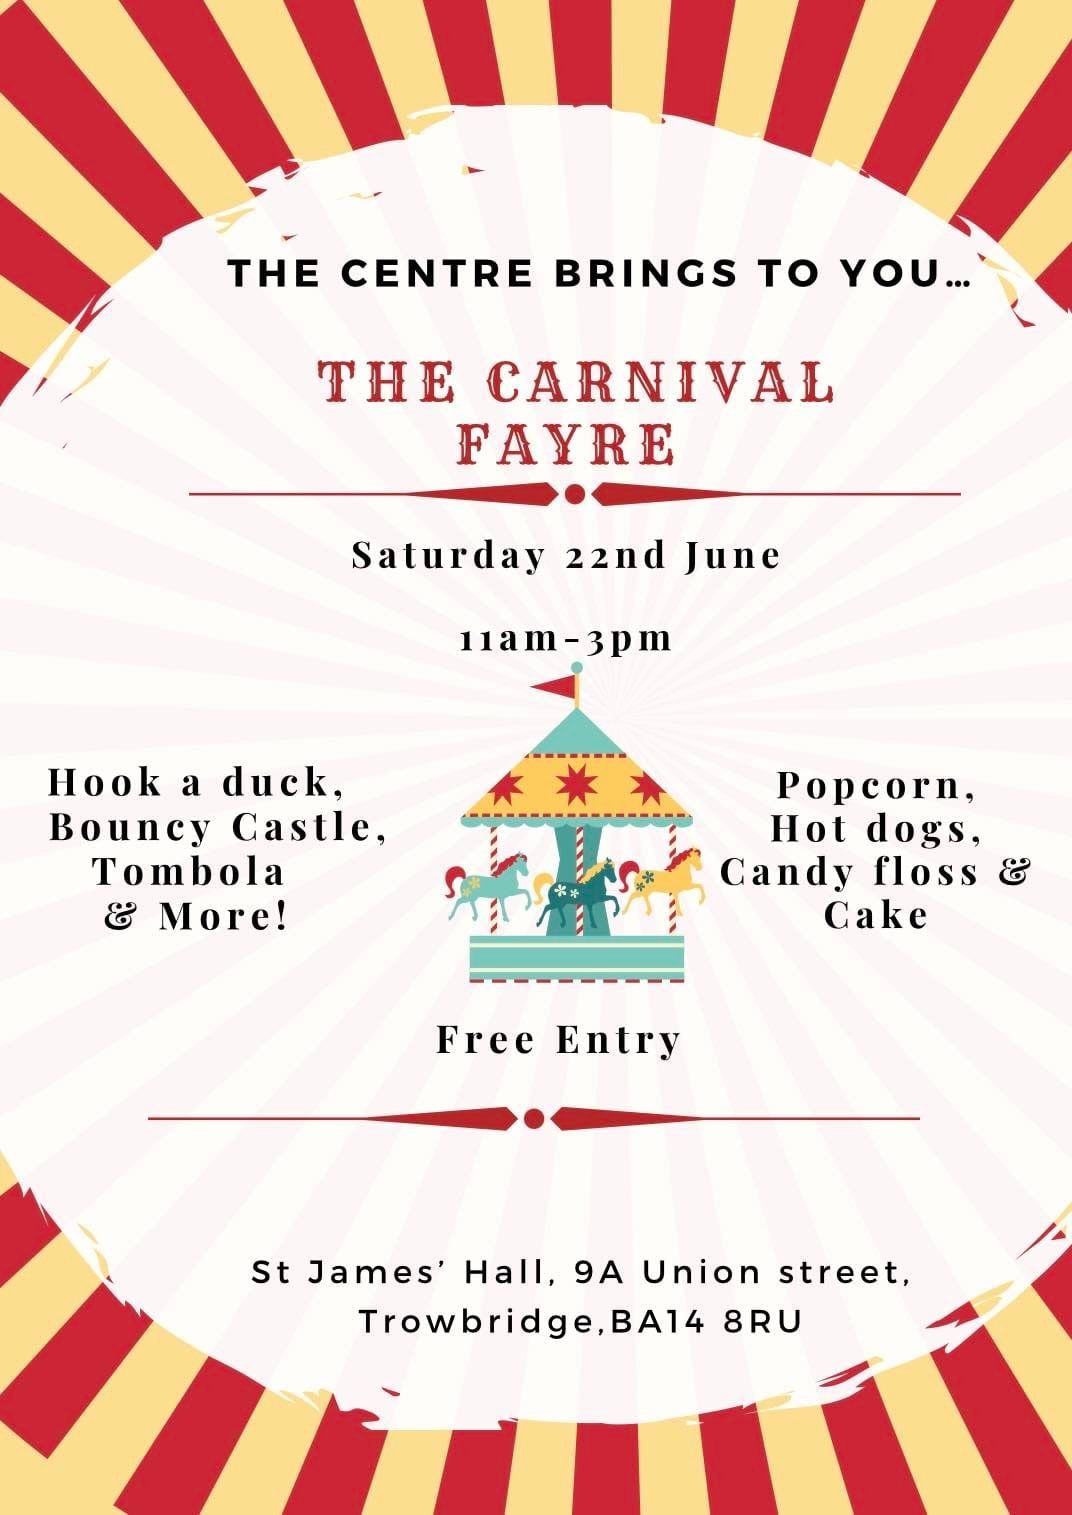 The Centre's Carnival Fayre